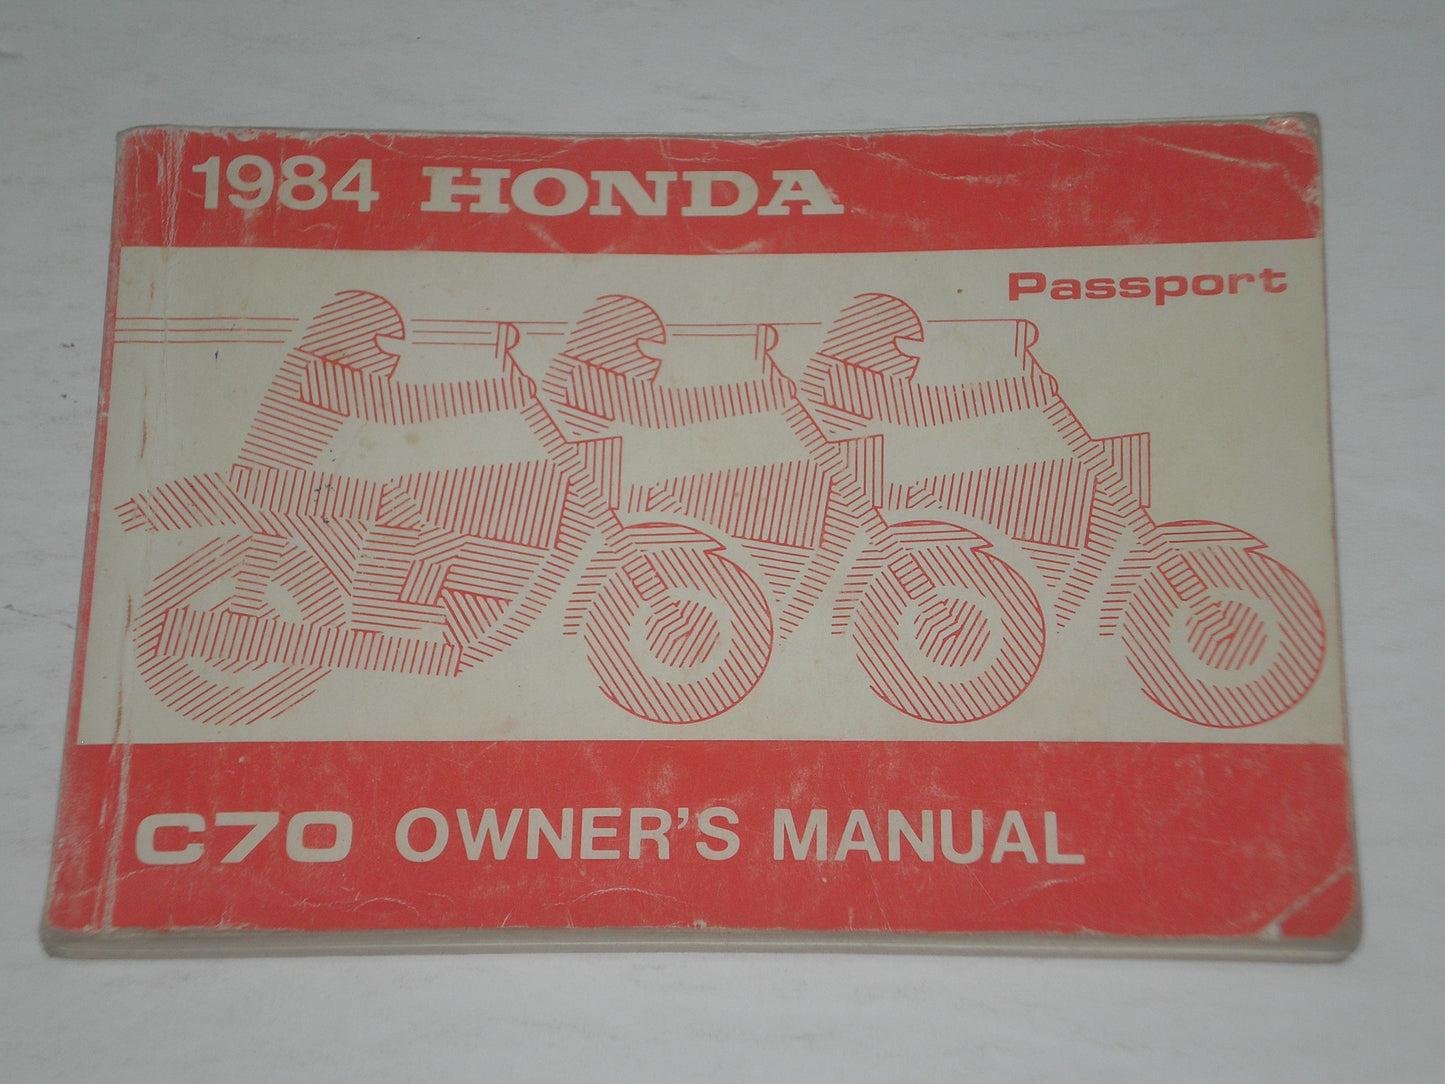 HONDA C70 E Passport 70 1984  Owner's Manual  00X32-GB5-6100  32GB5610  #A169